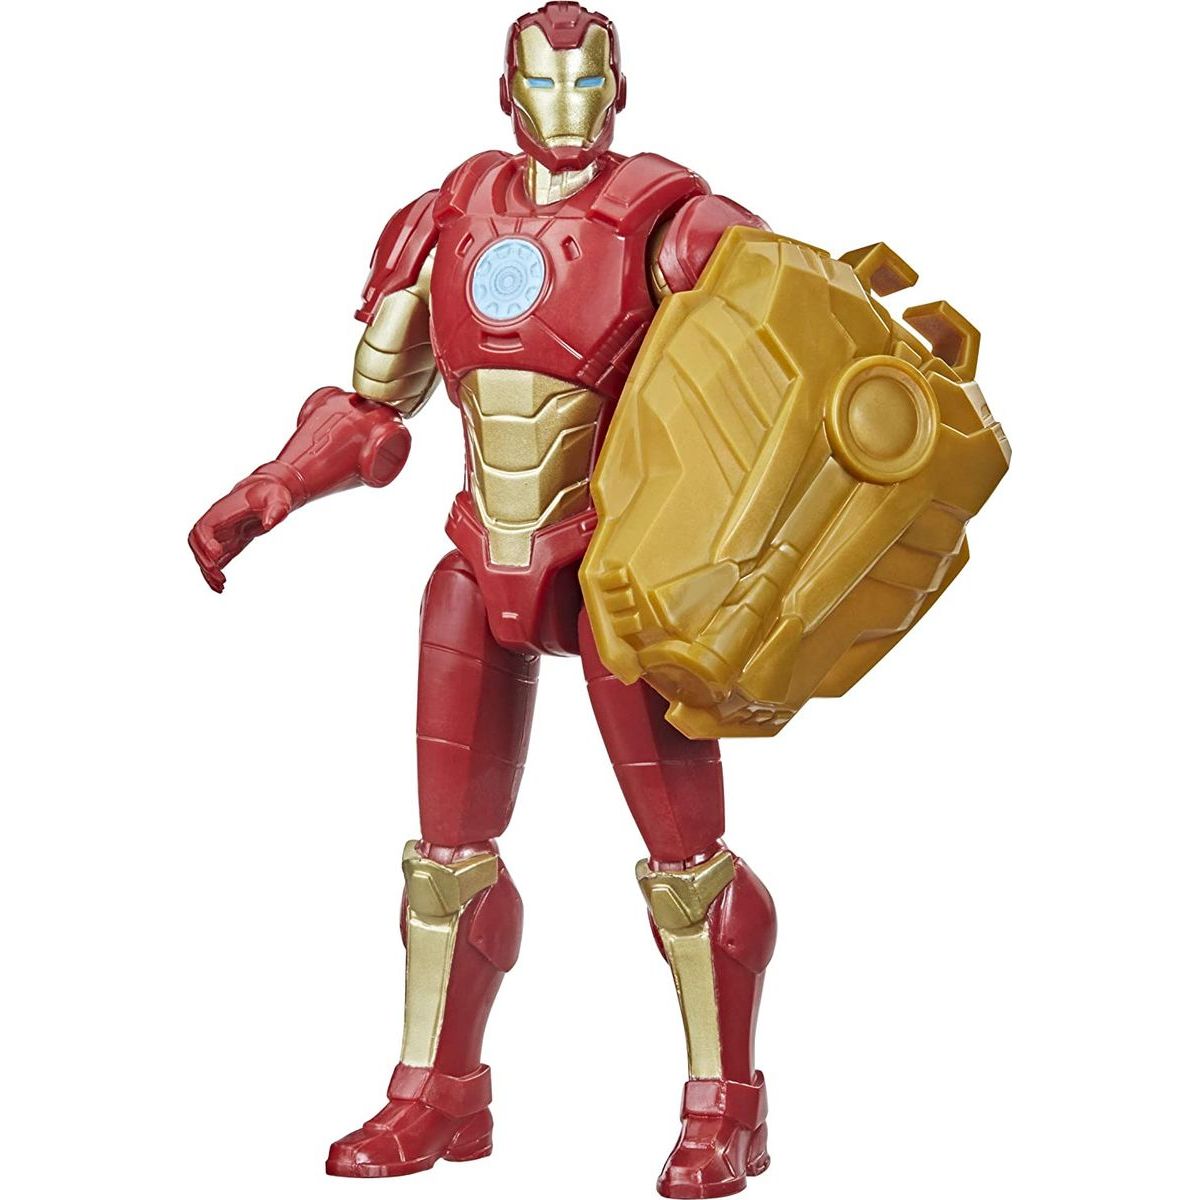 Hasbro Avengers Mech Strike figurka 15 cm Iron Man